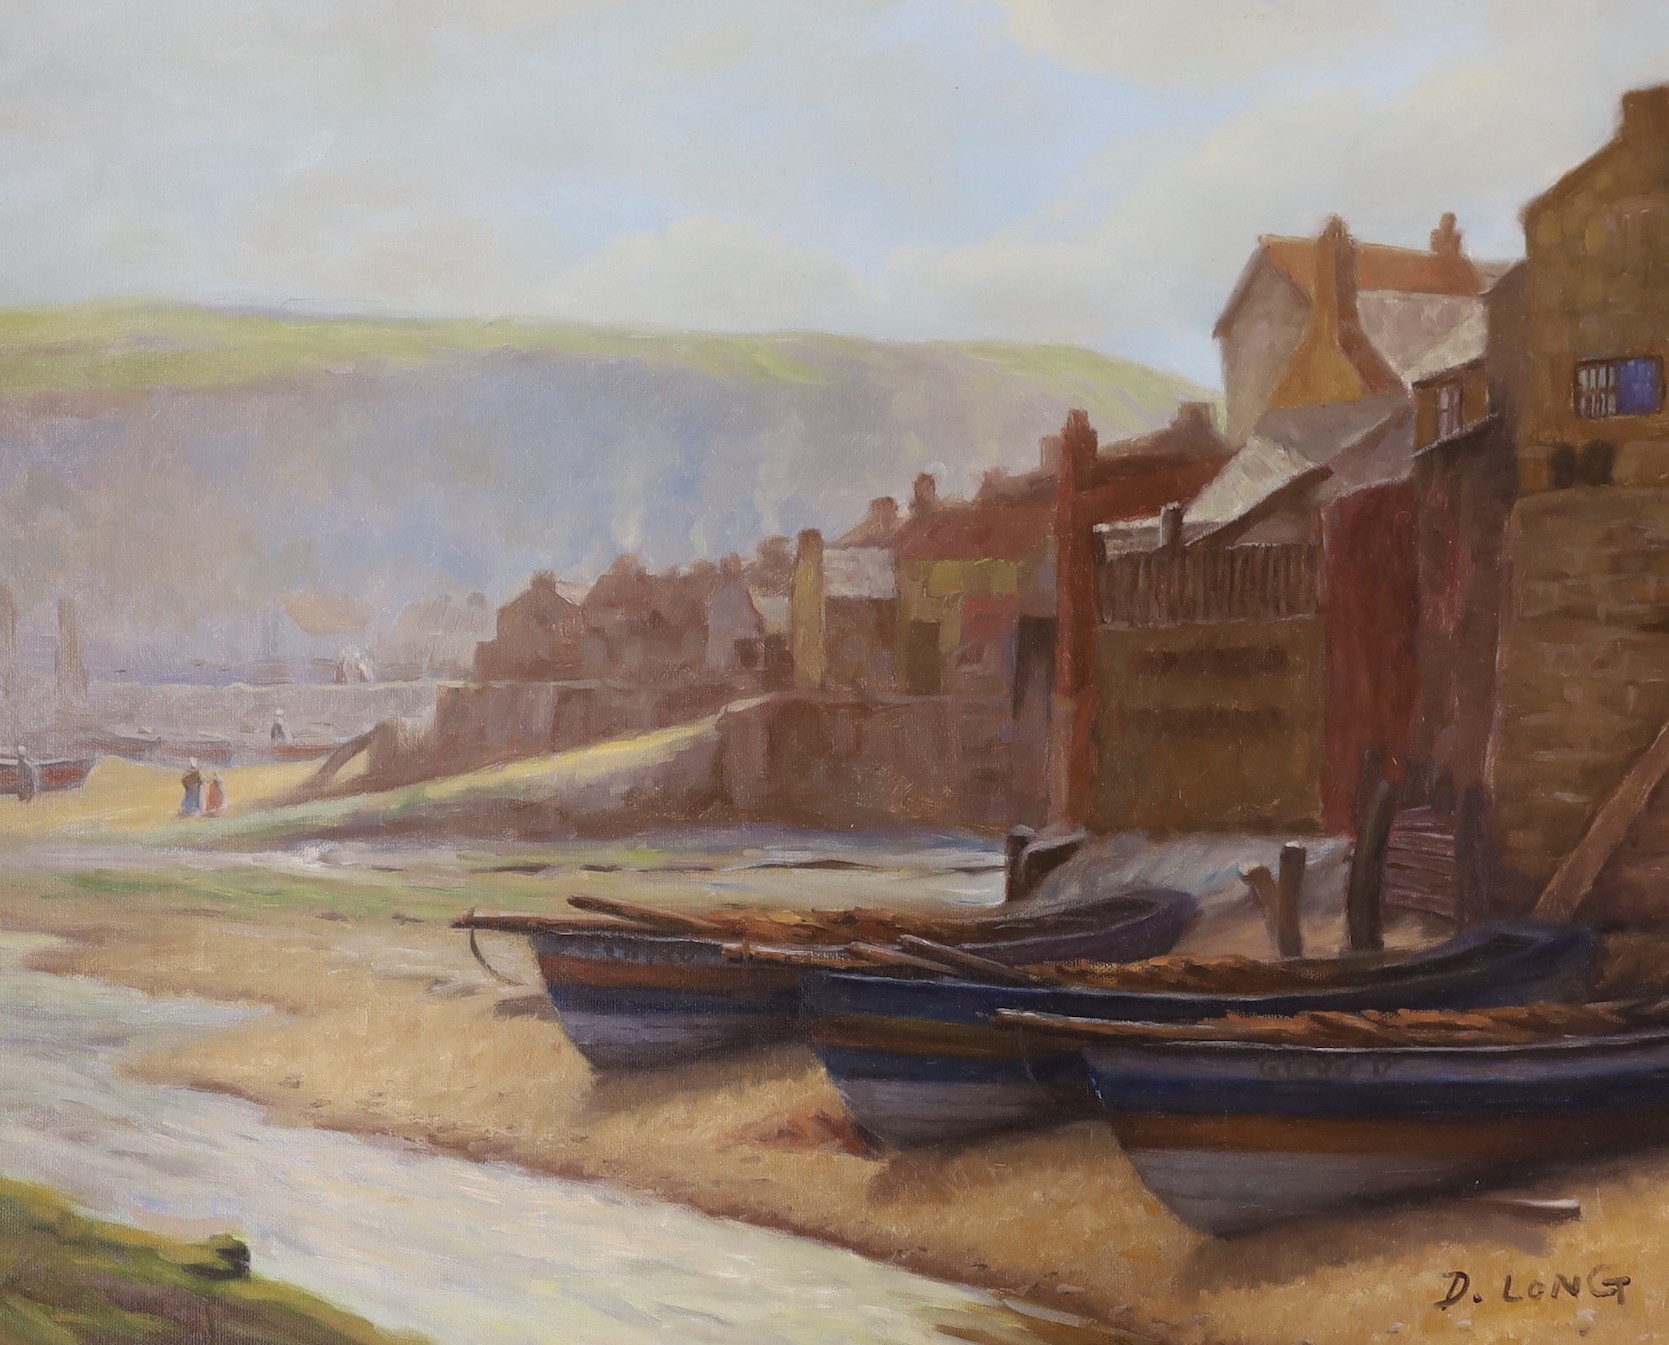 D. Long, oil on canvas, Estuary at low tide, signed, 41 x 51cm, unframed